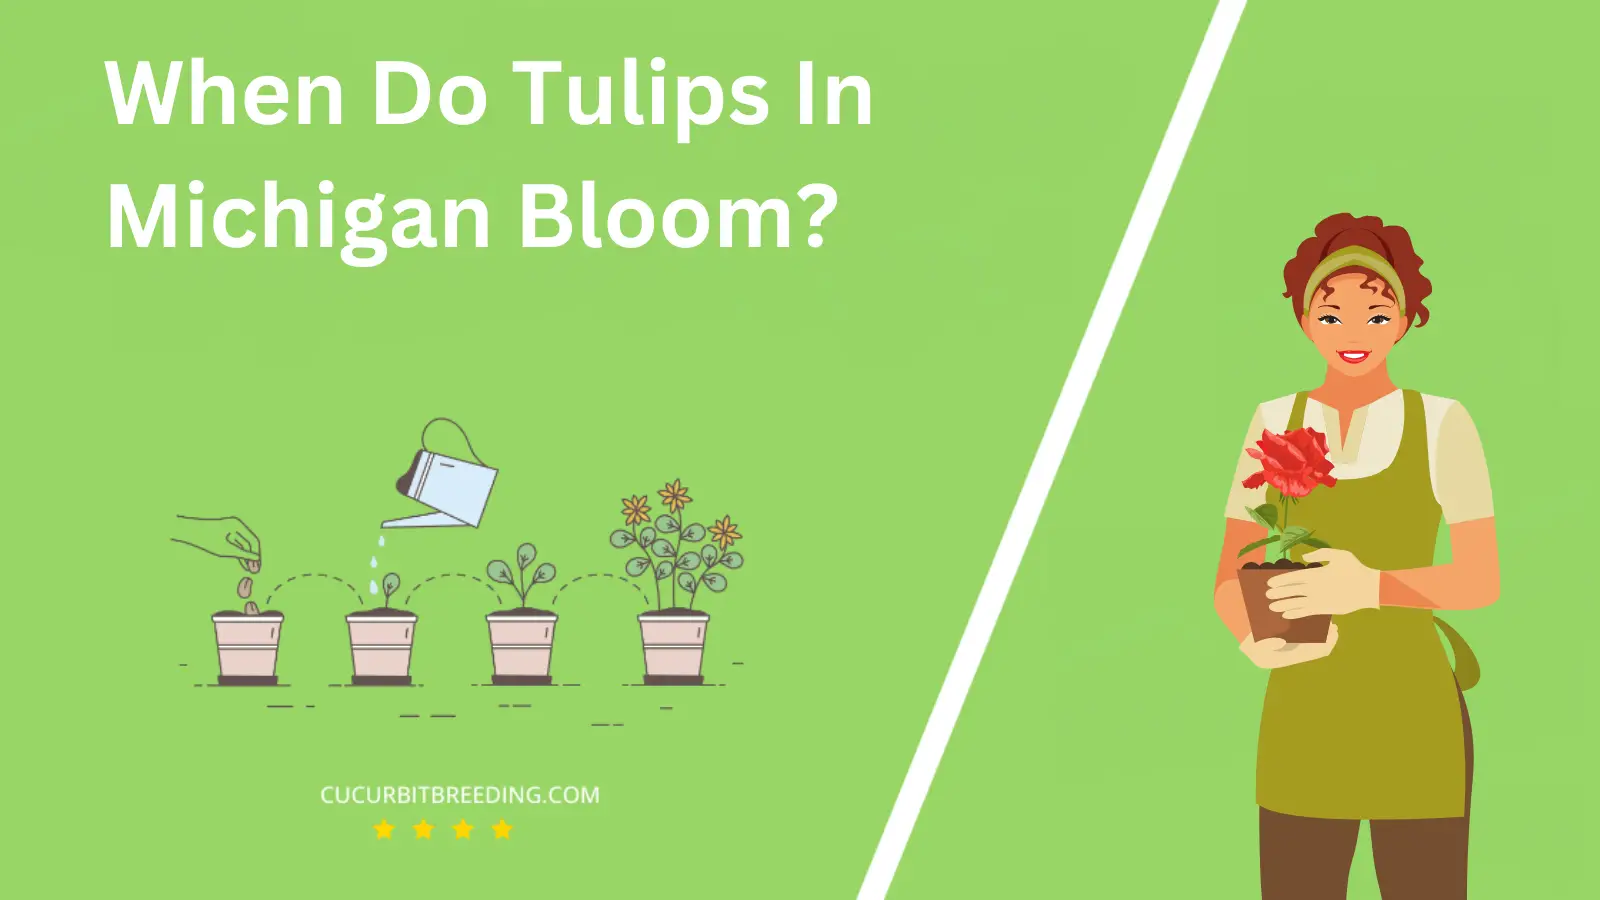 When Do Tulips In Michigan Bloom?